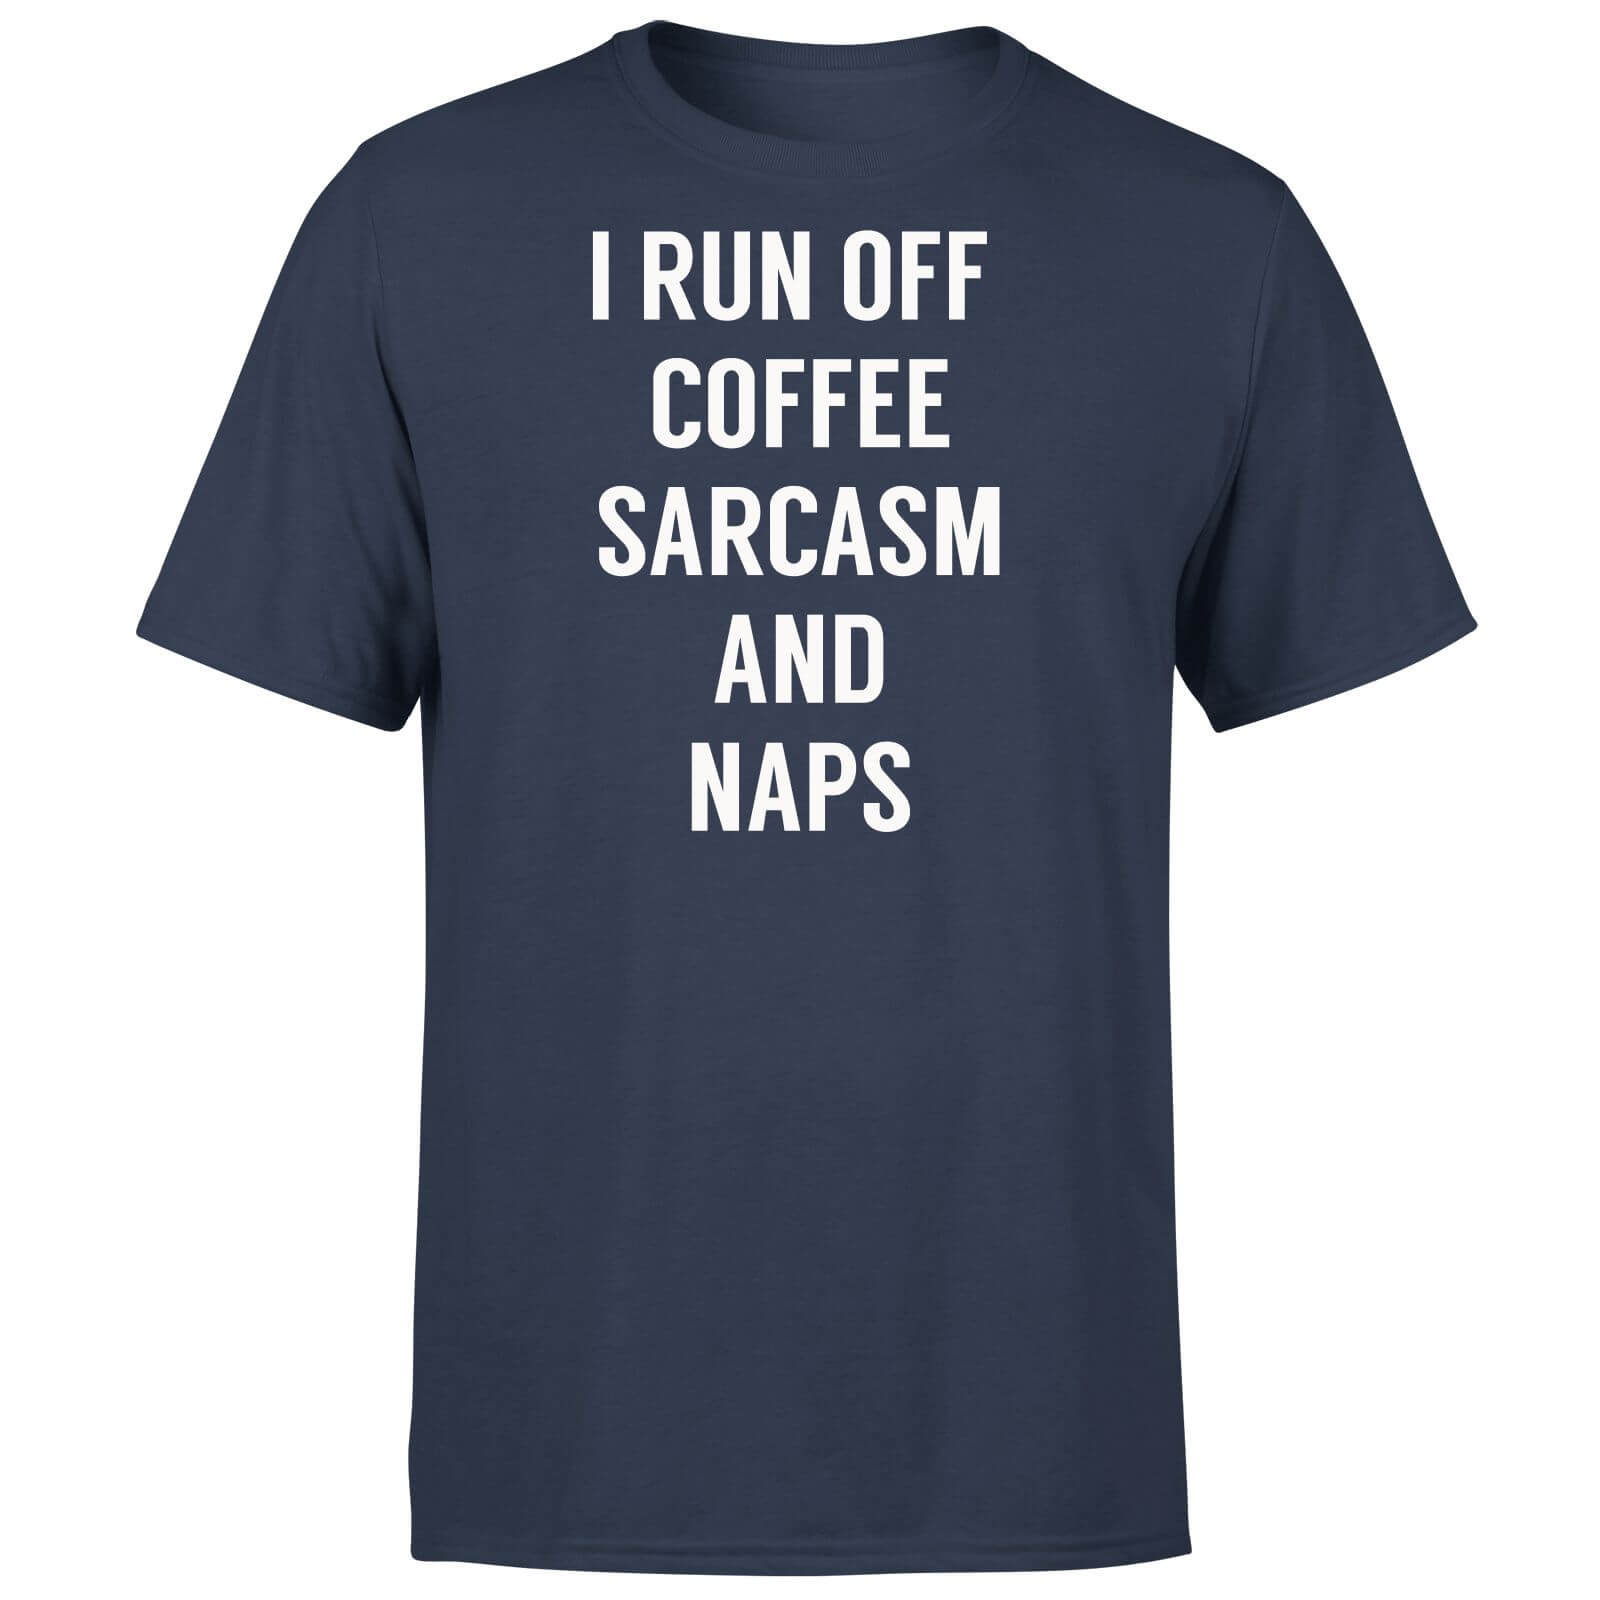 I Run Off Coffee Sarcasm and Naps T-Shirt - Navy - L - Navy